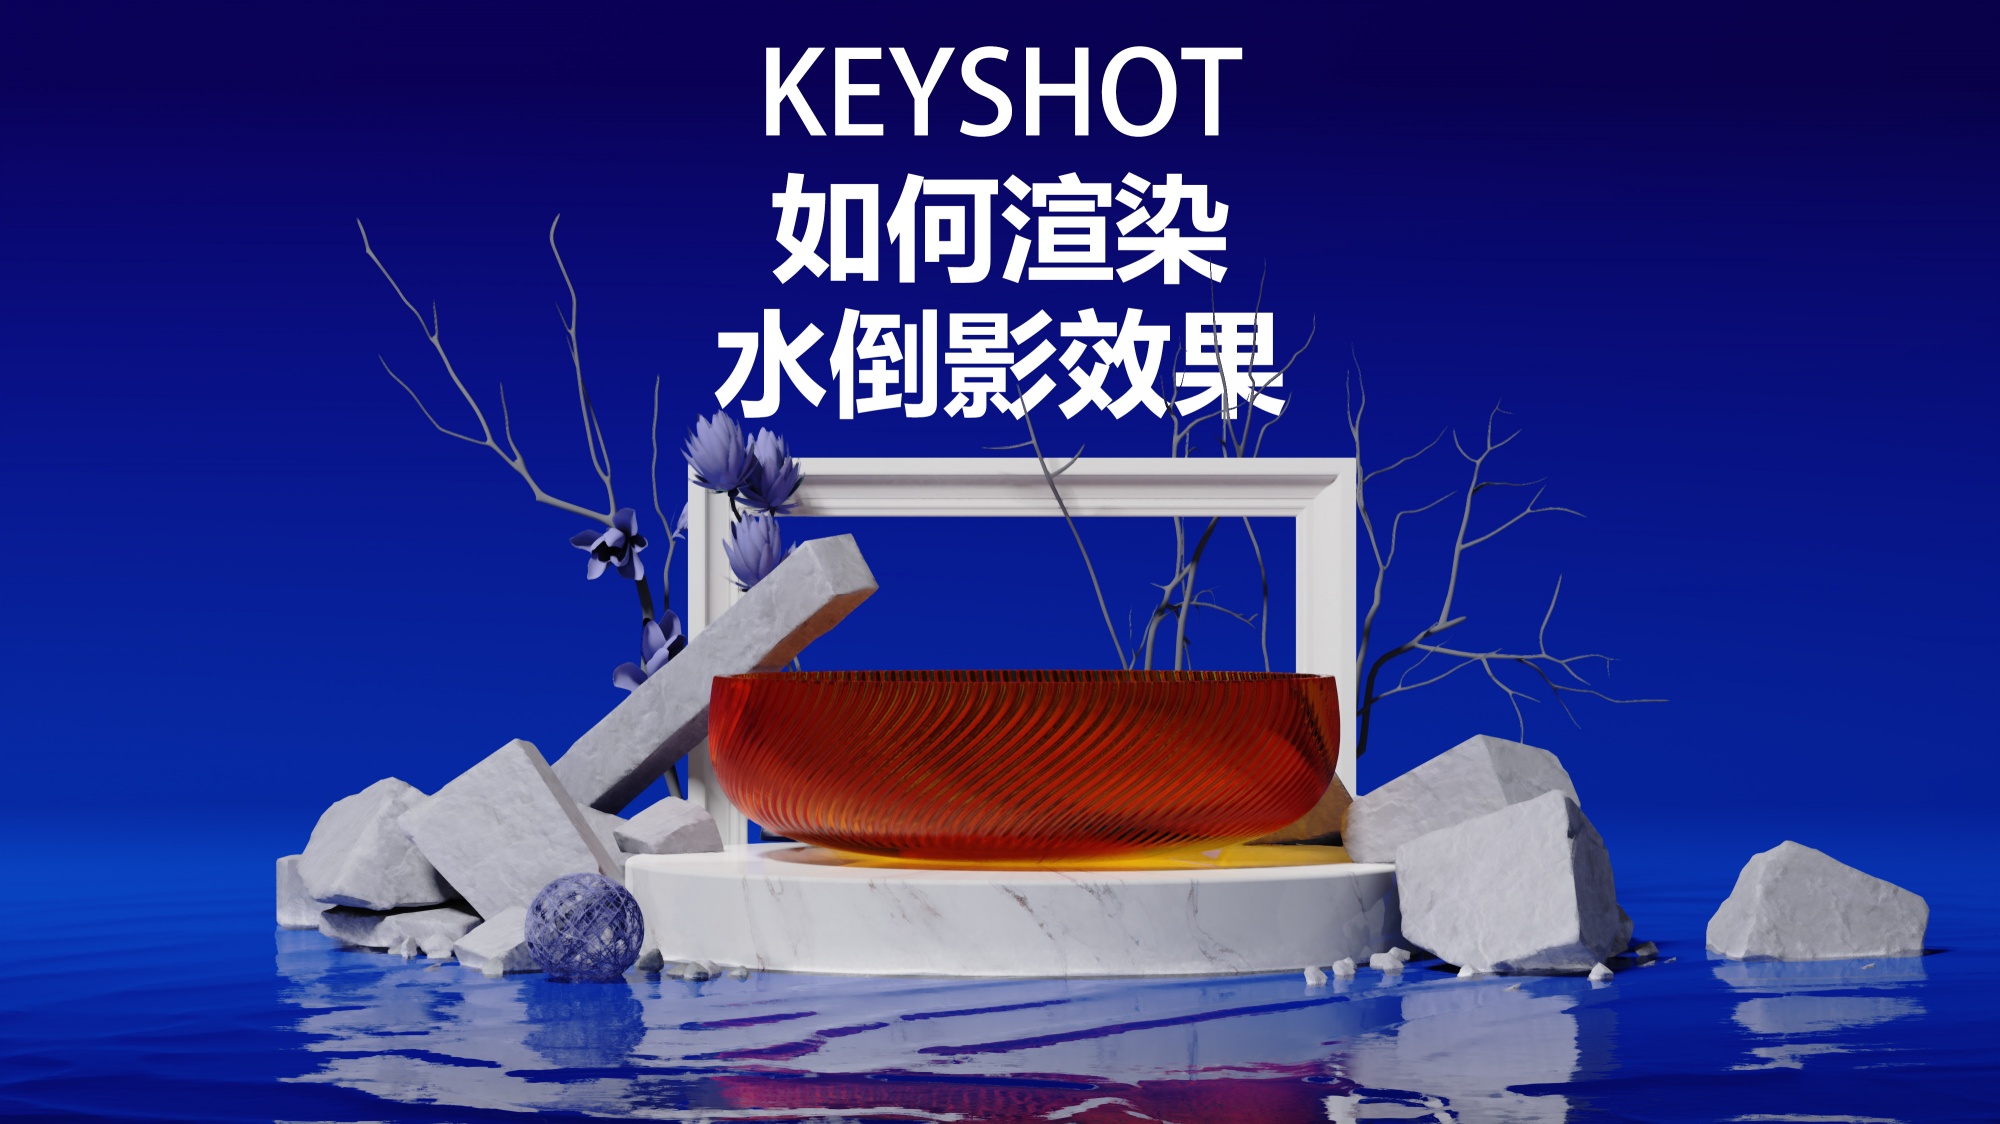 Keyshot渲染中如何营造这种水波纹效果